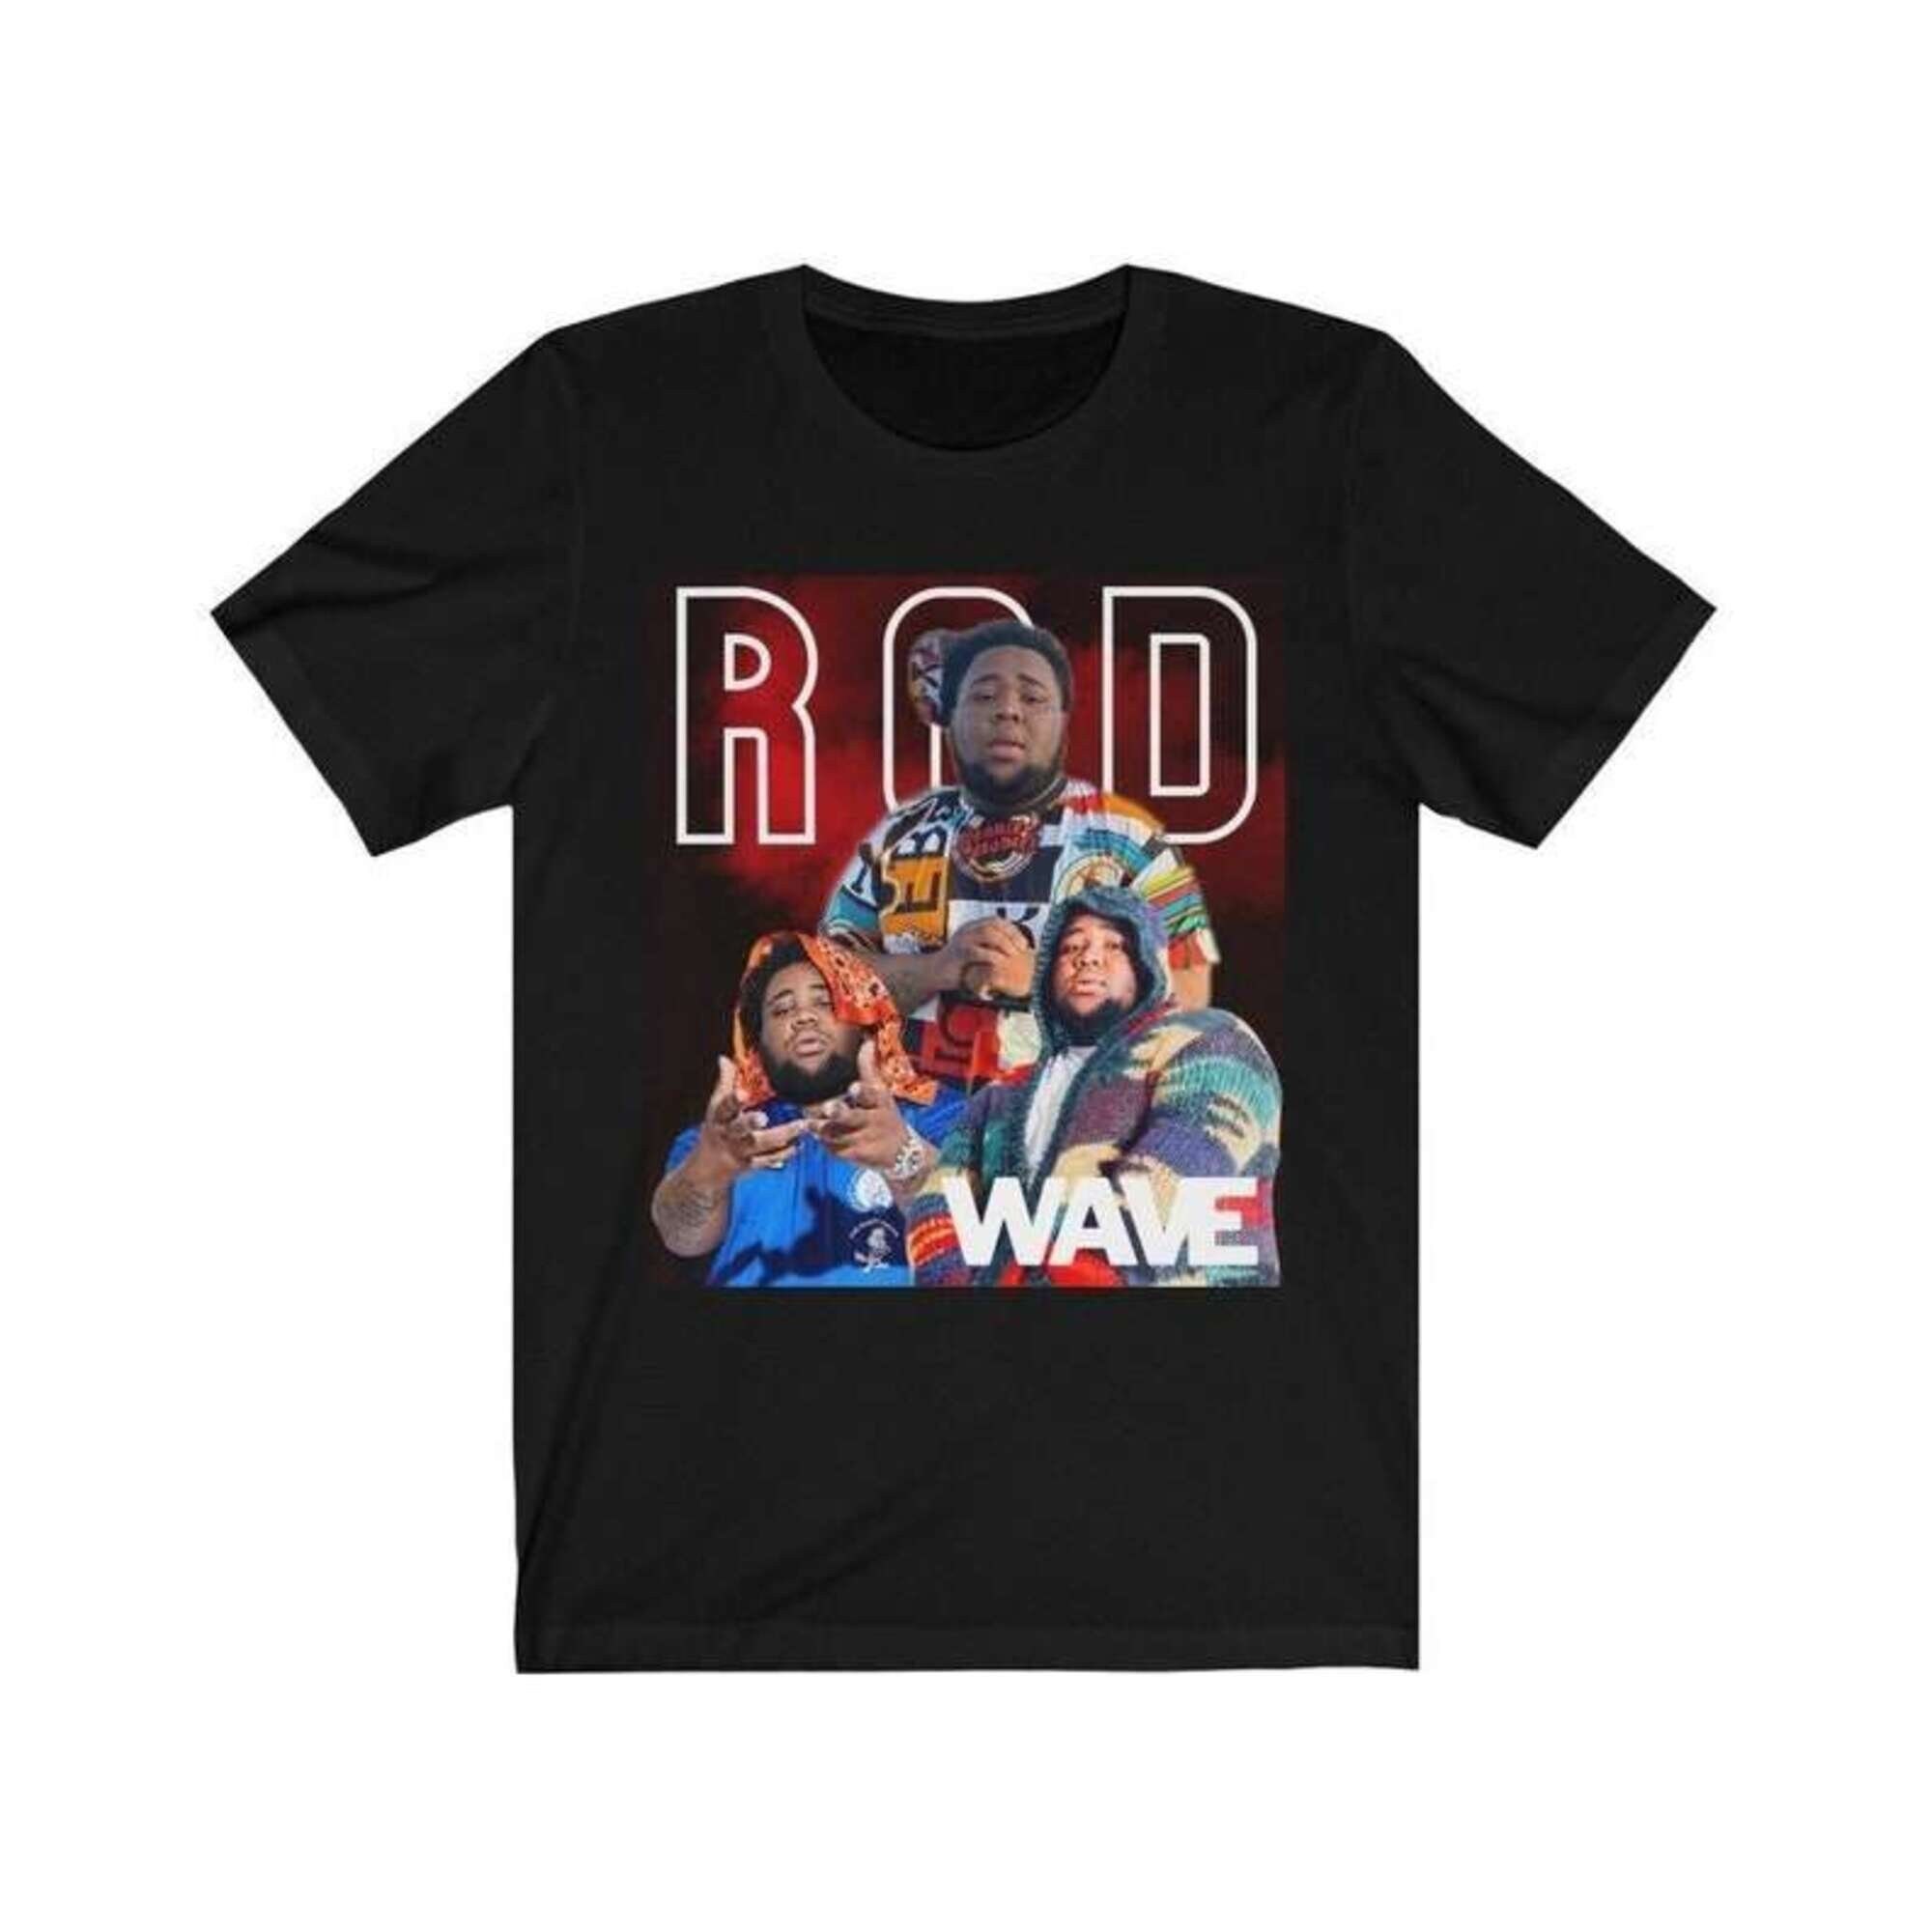 Rod Wave T-Shirt DZT